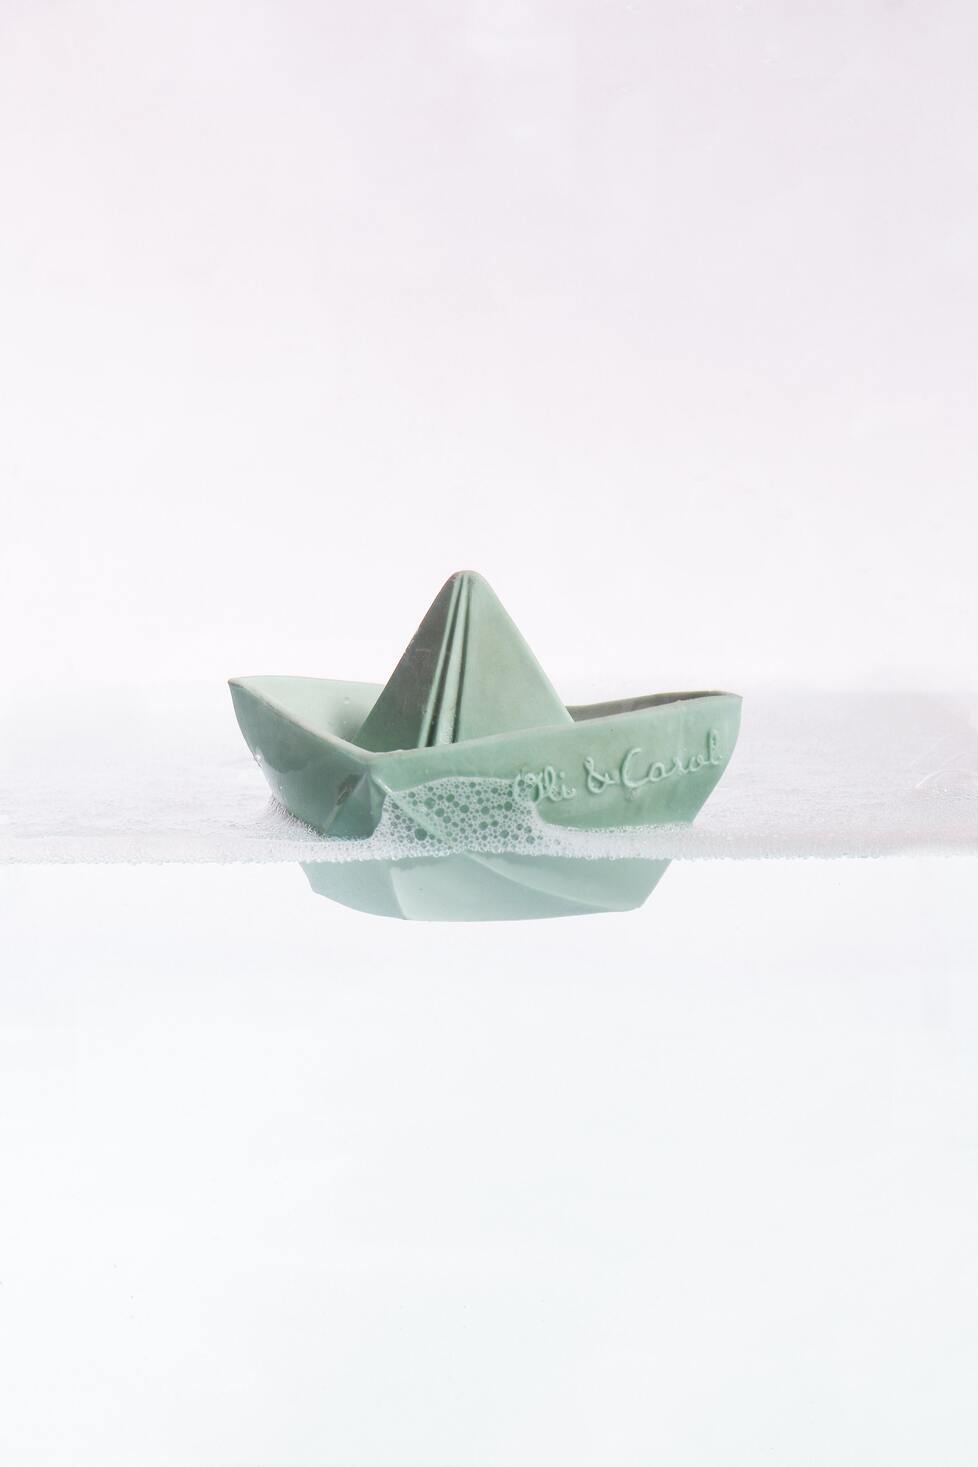 Barco Origami Menta- Barcos Origami